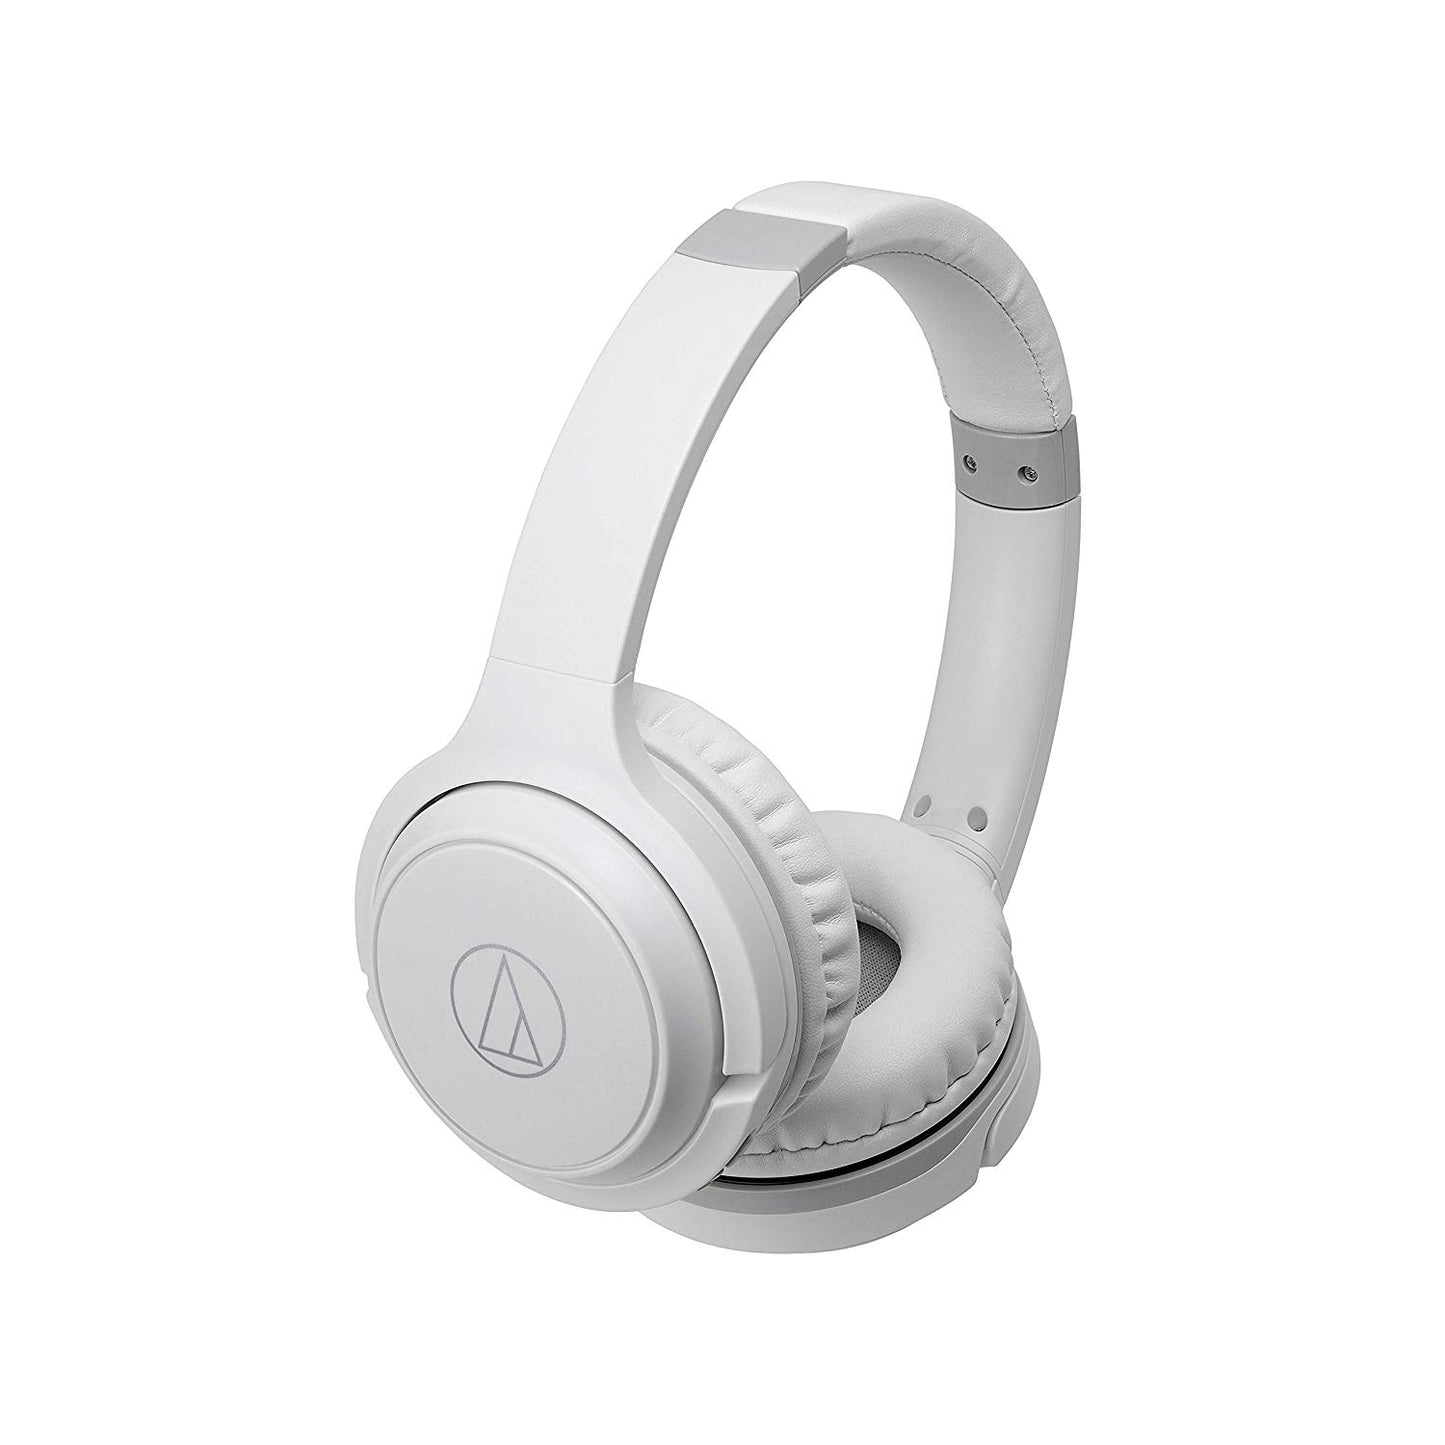 Audio Technica ATH-S200BTWH SonicFuel Wireless On-Ear Headphones, White